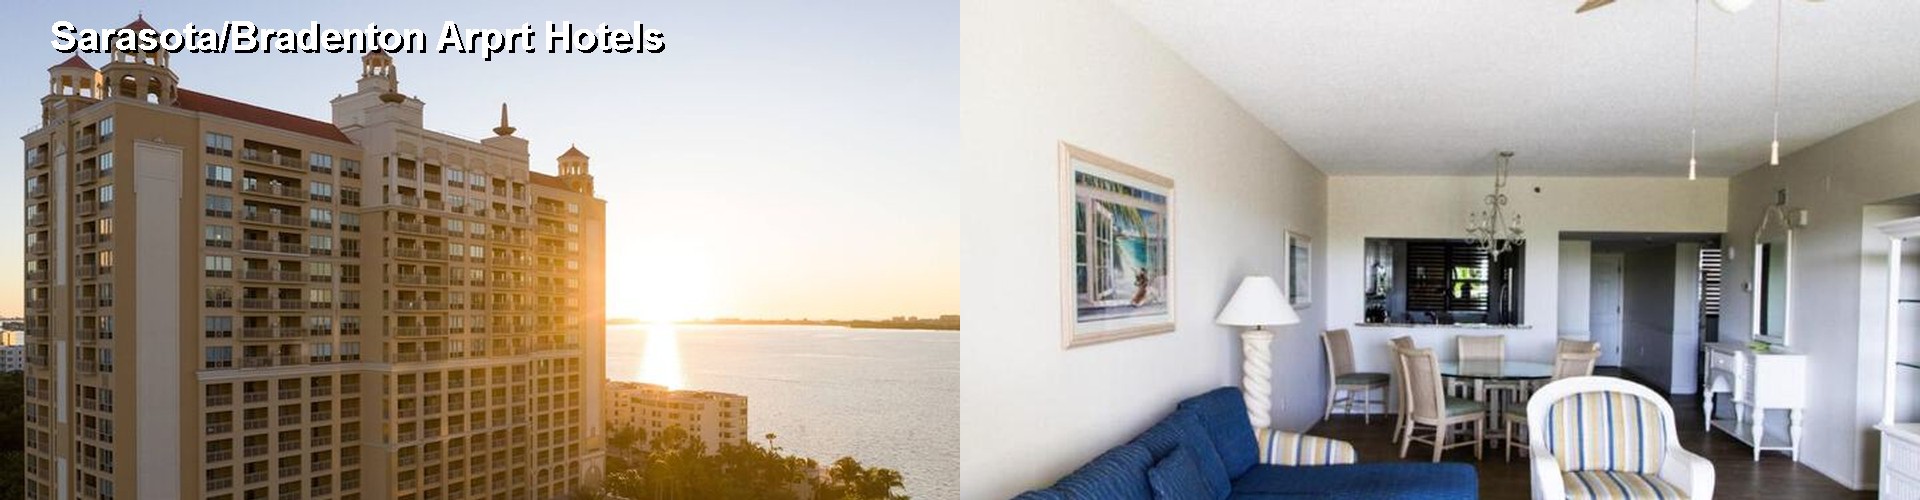 5 Best Hotels near Sarasota/Bradenton Arprt